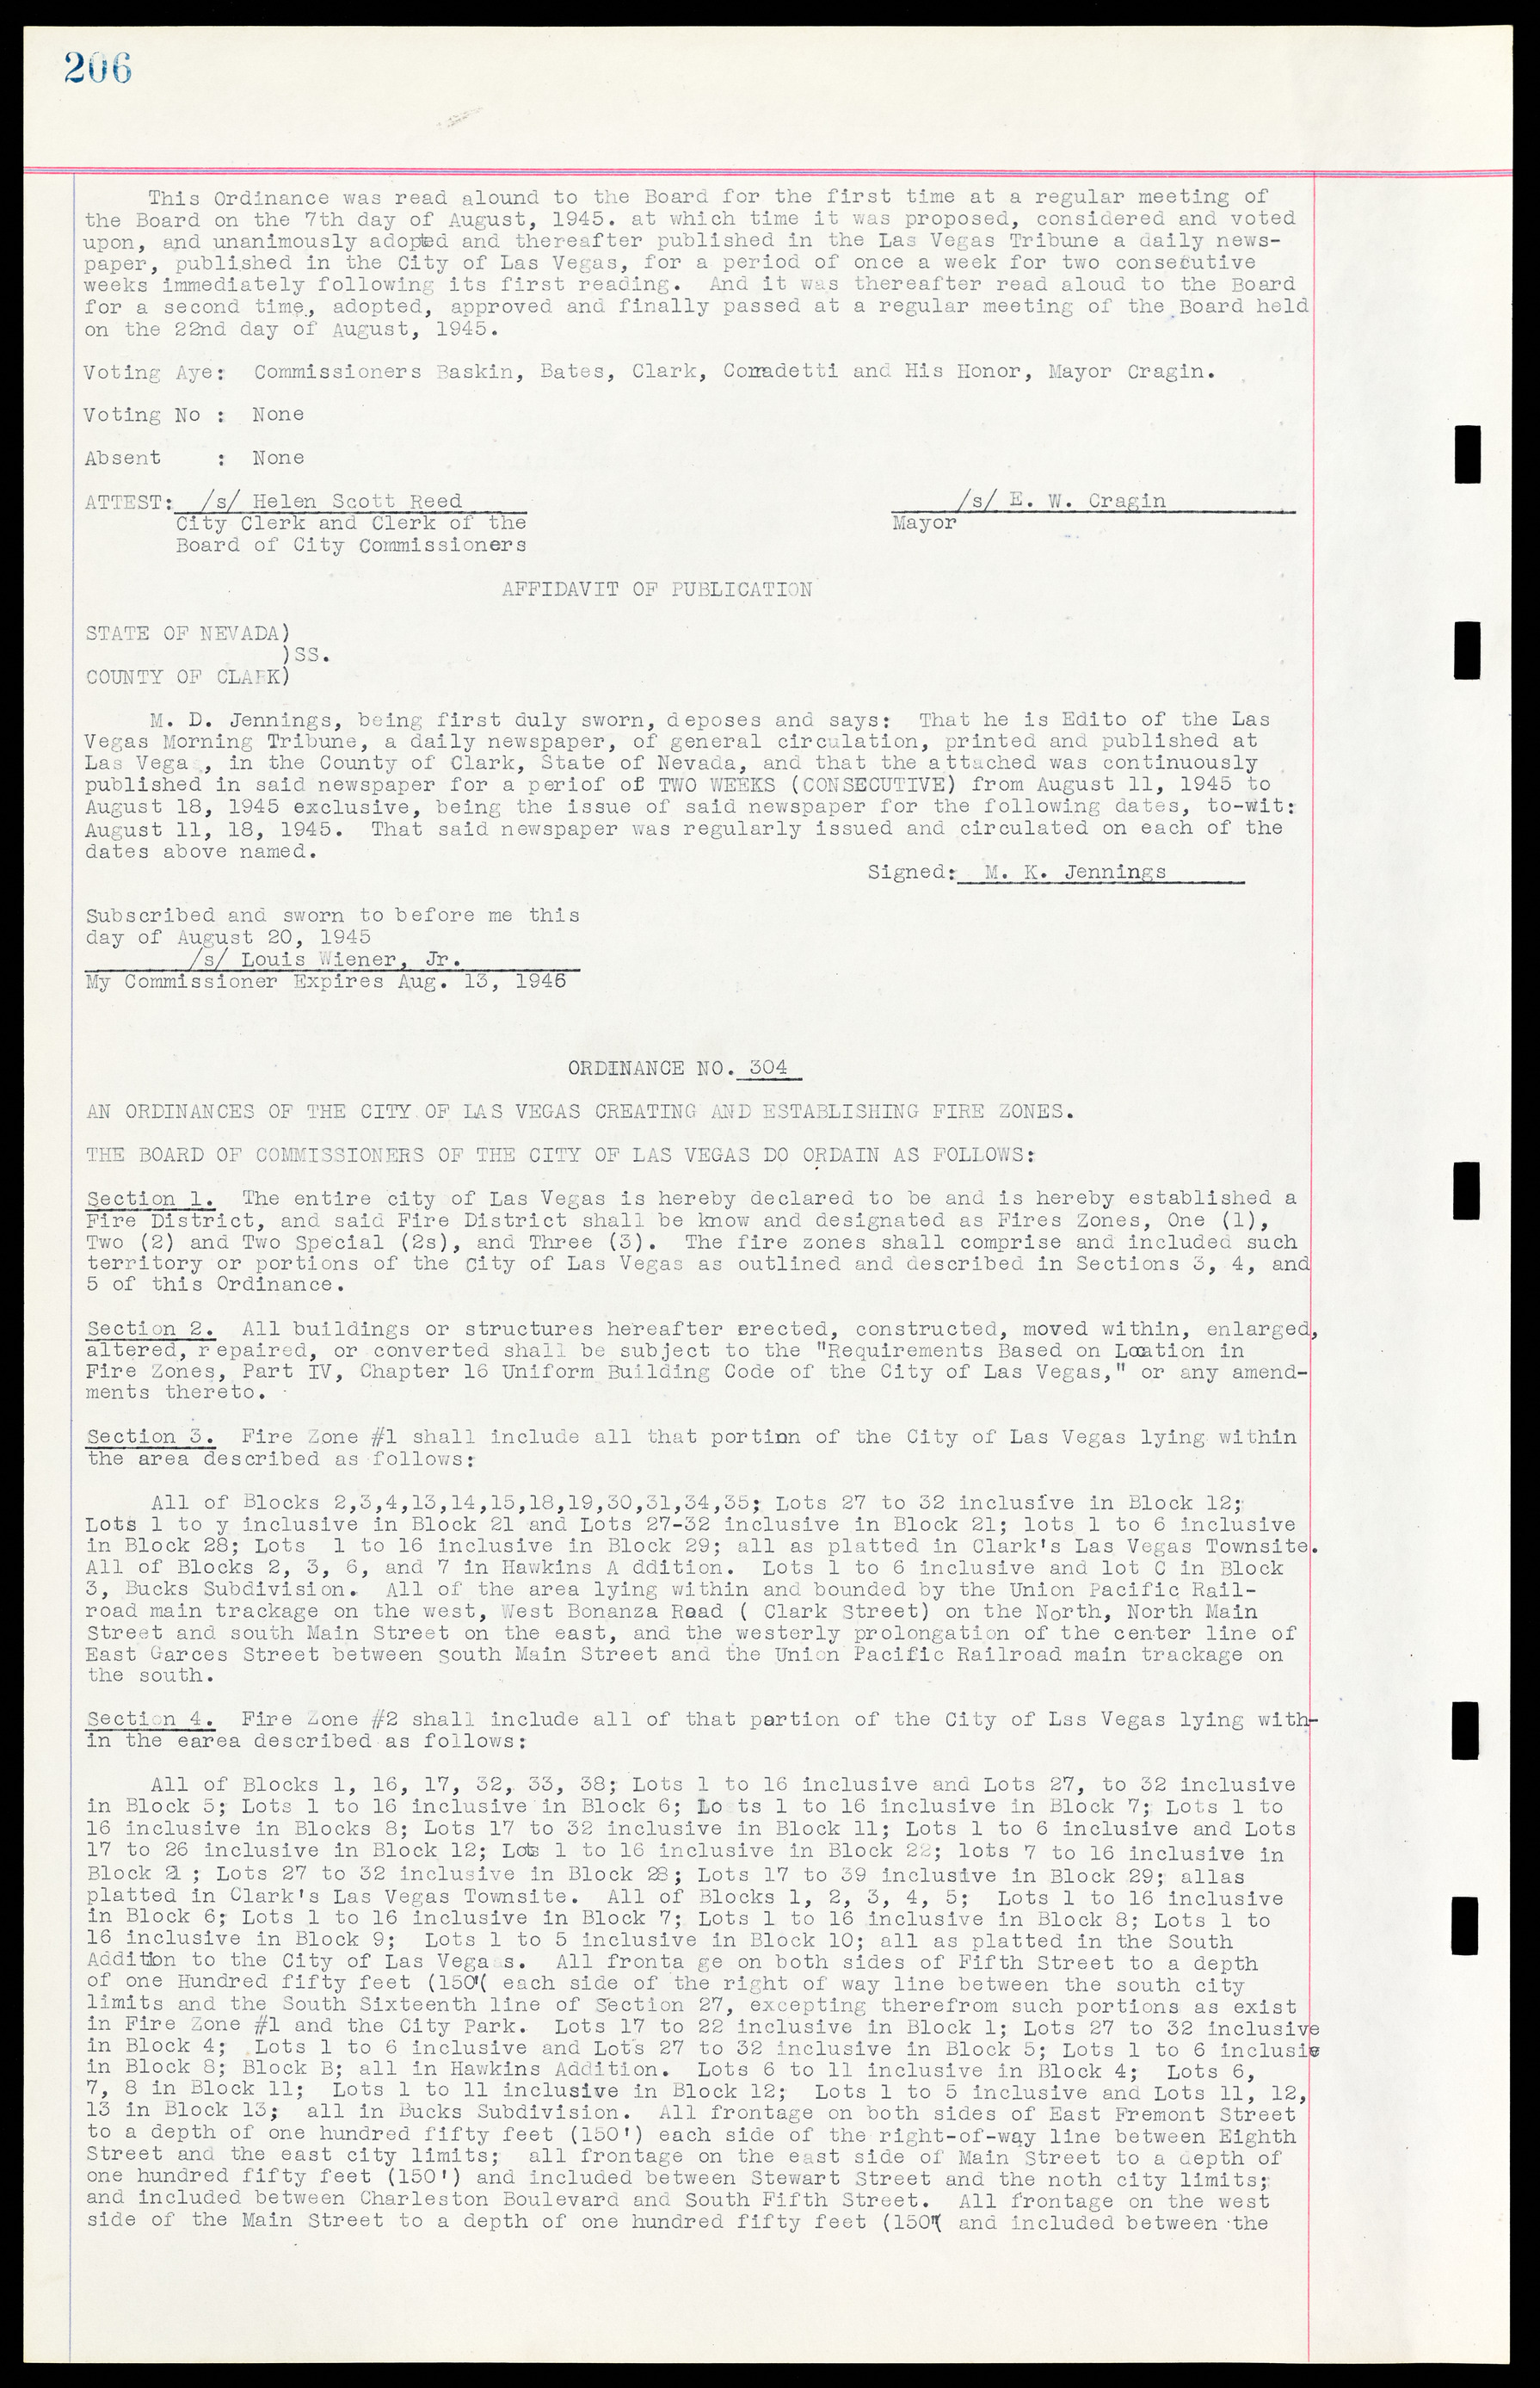 Las Vegas City Ordinances, March 31, 1933 to October 25, 1950, lvc000014-235